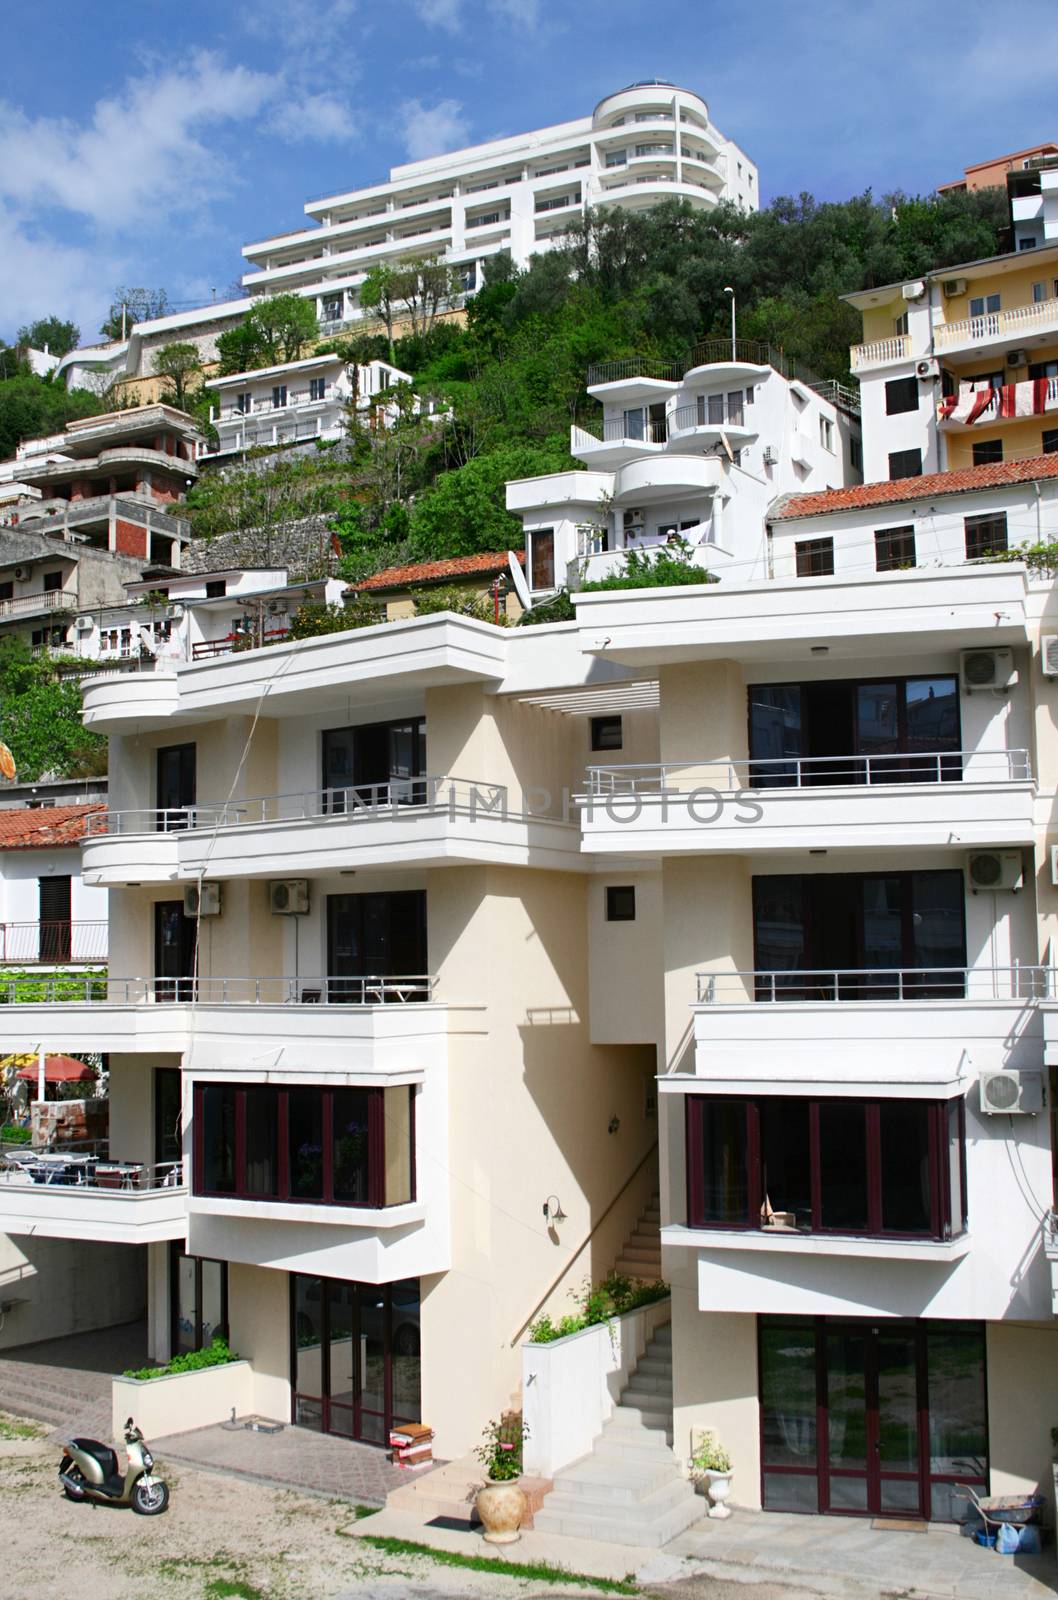 Hotel resort area in Montenegro by Garsya